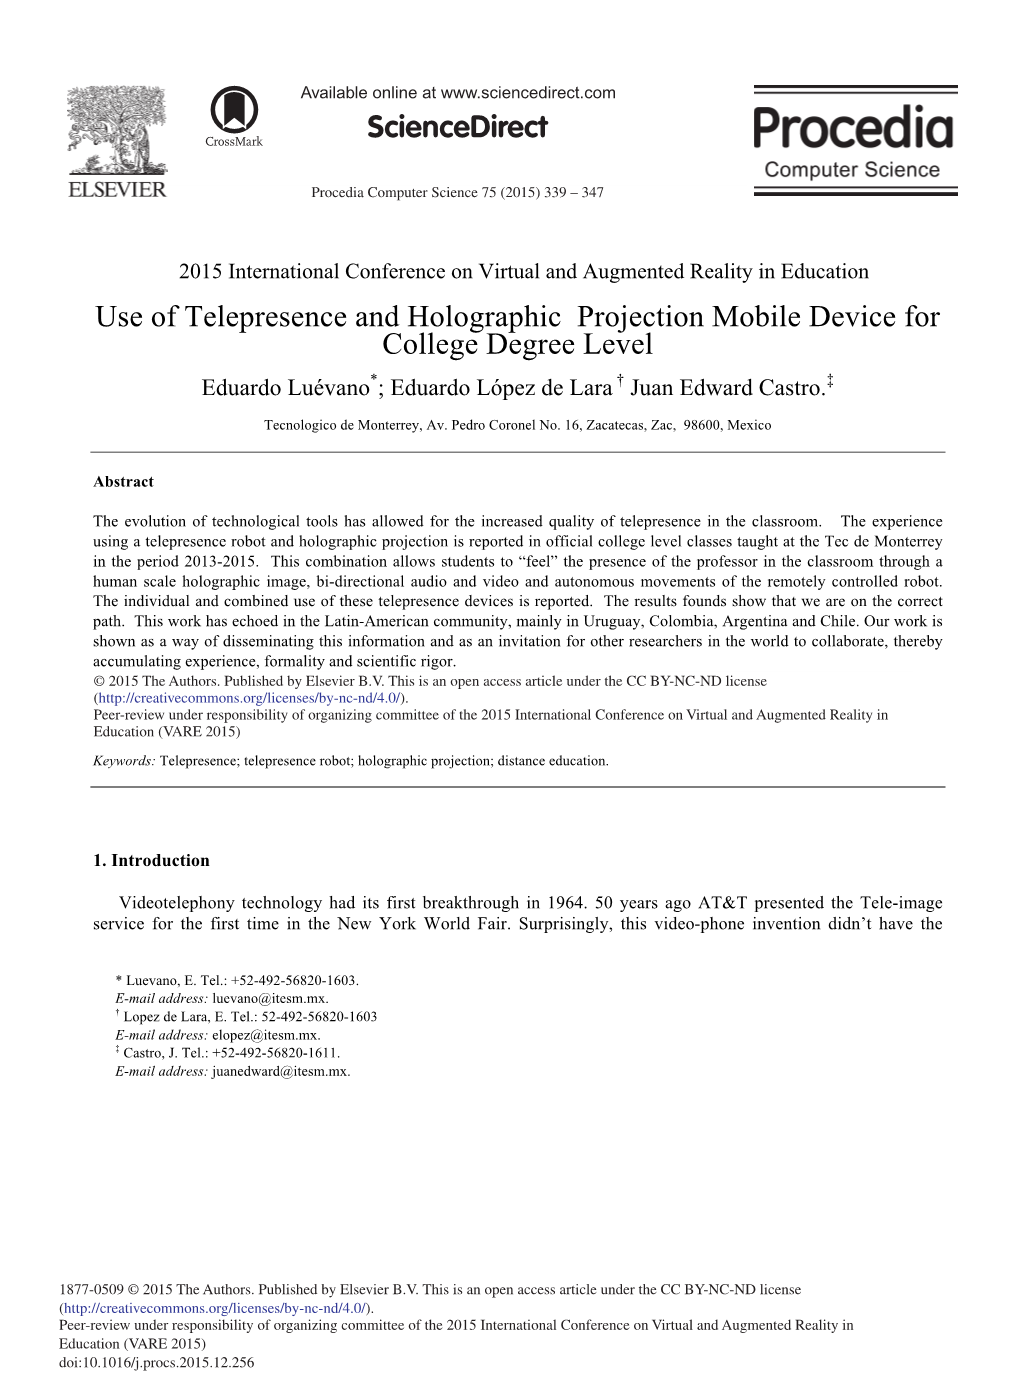 Use of Telepresence and Holographic Projection Mobile Device for College Degree Level Eduardo Luévano*; Eduardo López De Lara † Juan Edward Castro.‡